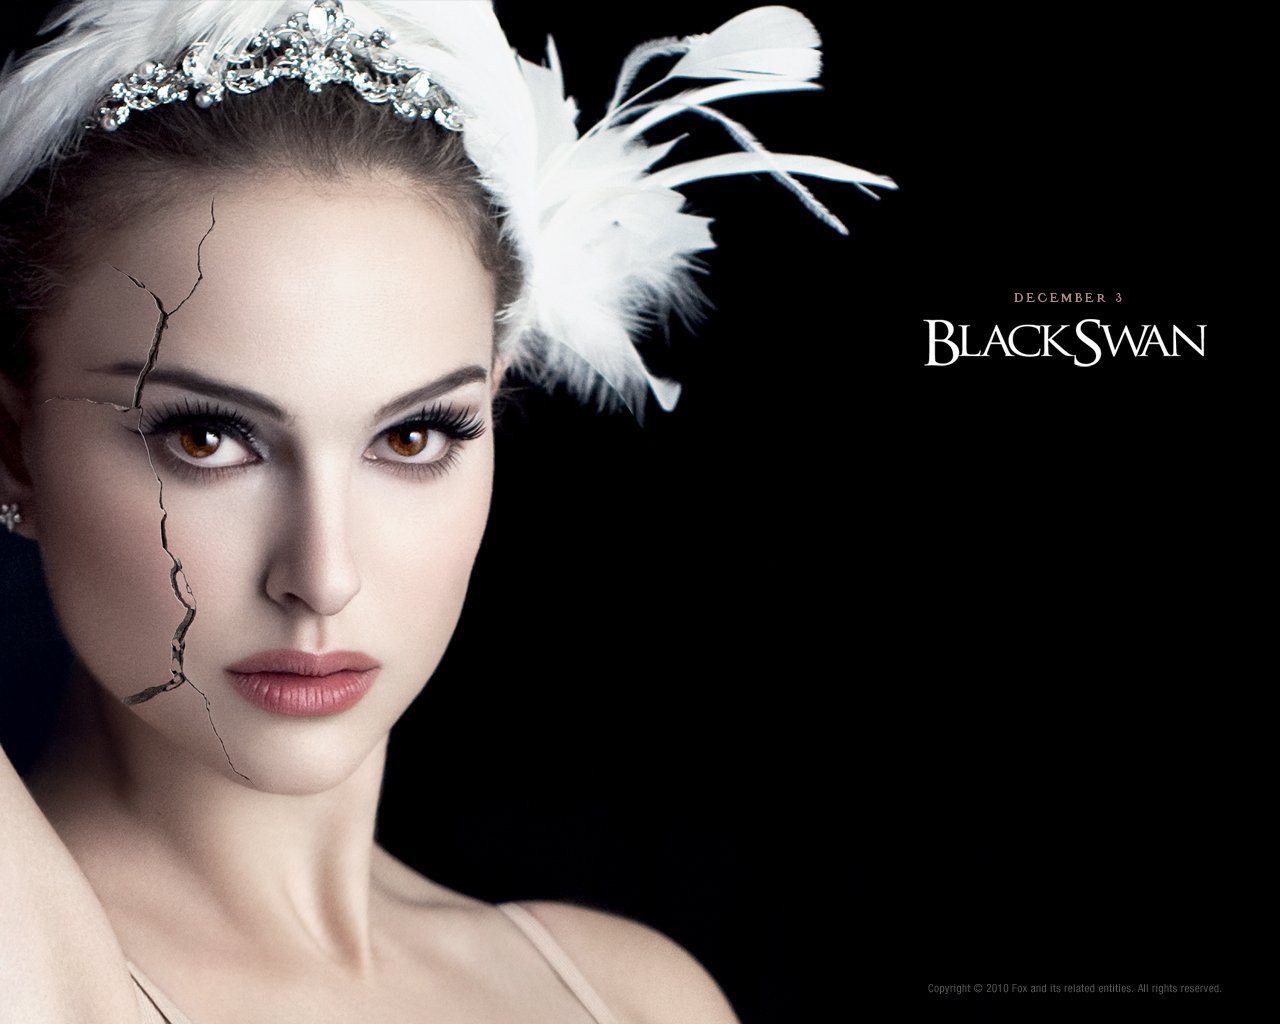 black swan wallpaper,face,headpiece,hair,eyebrow,beauty